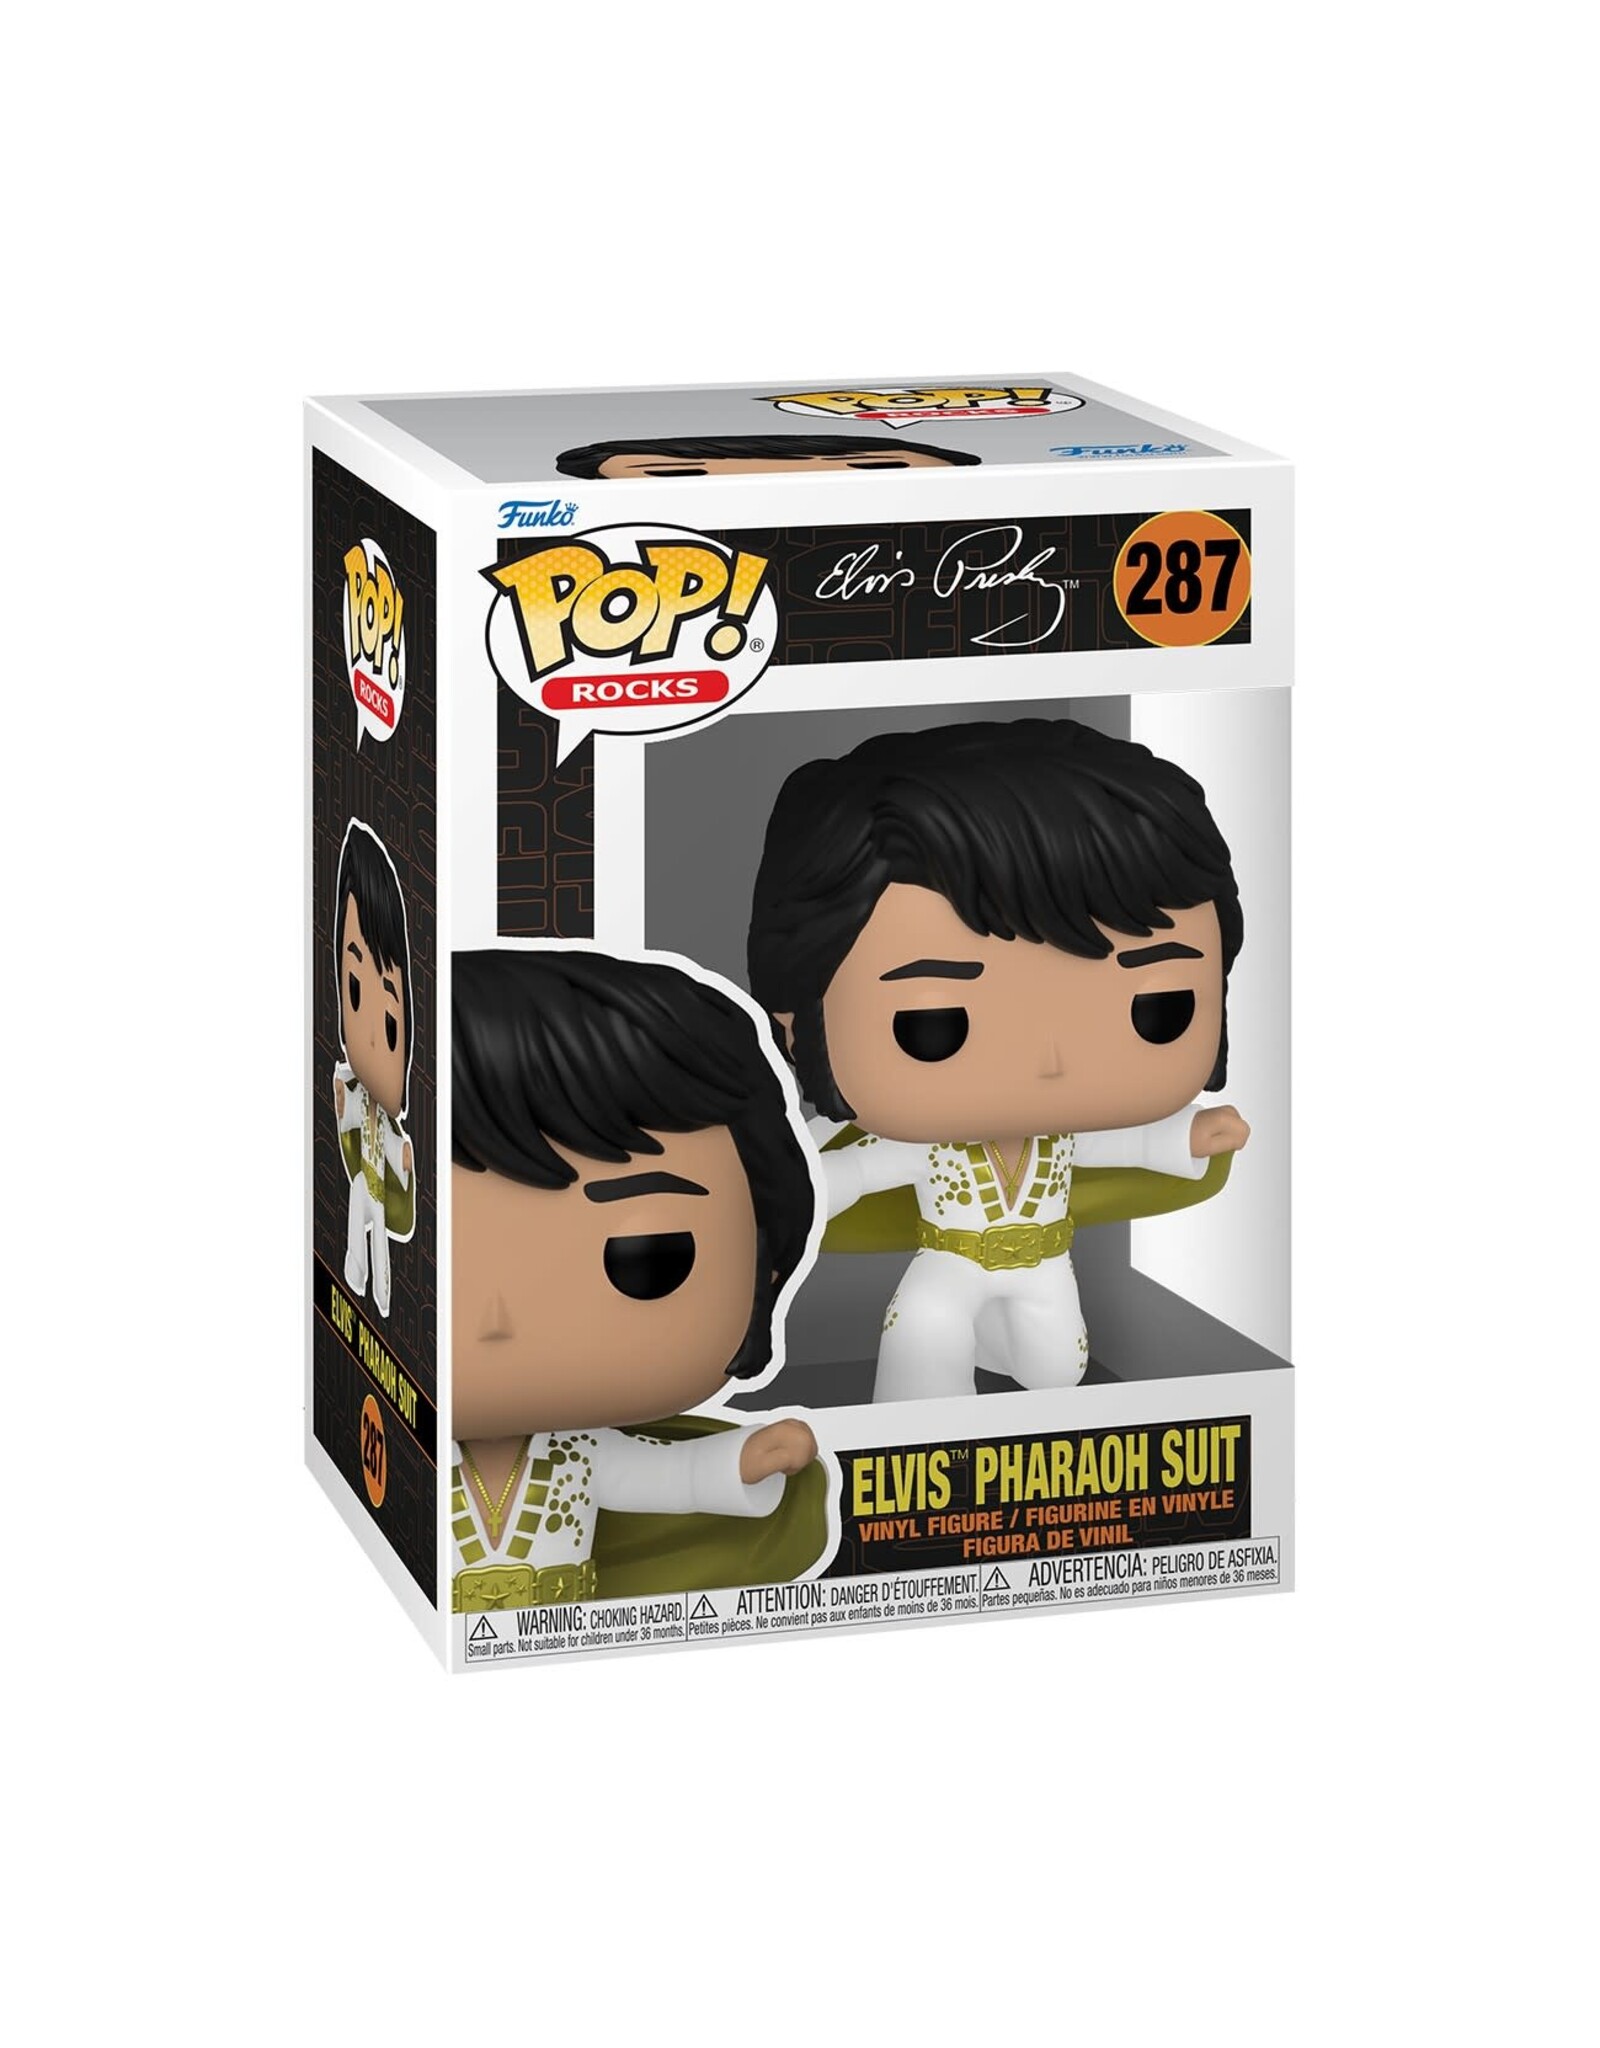 Funko Pop! Funko Pop! Rocks nr287 Elvis Presley Pharaoh Suit